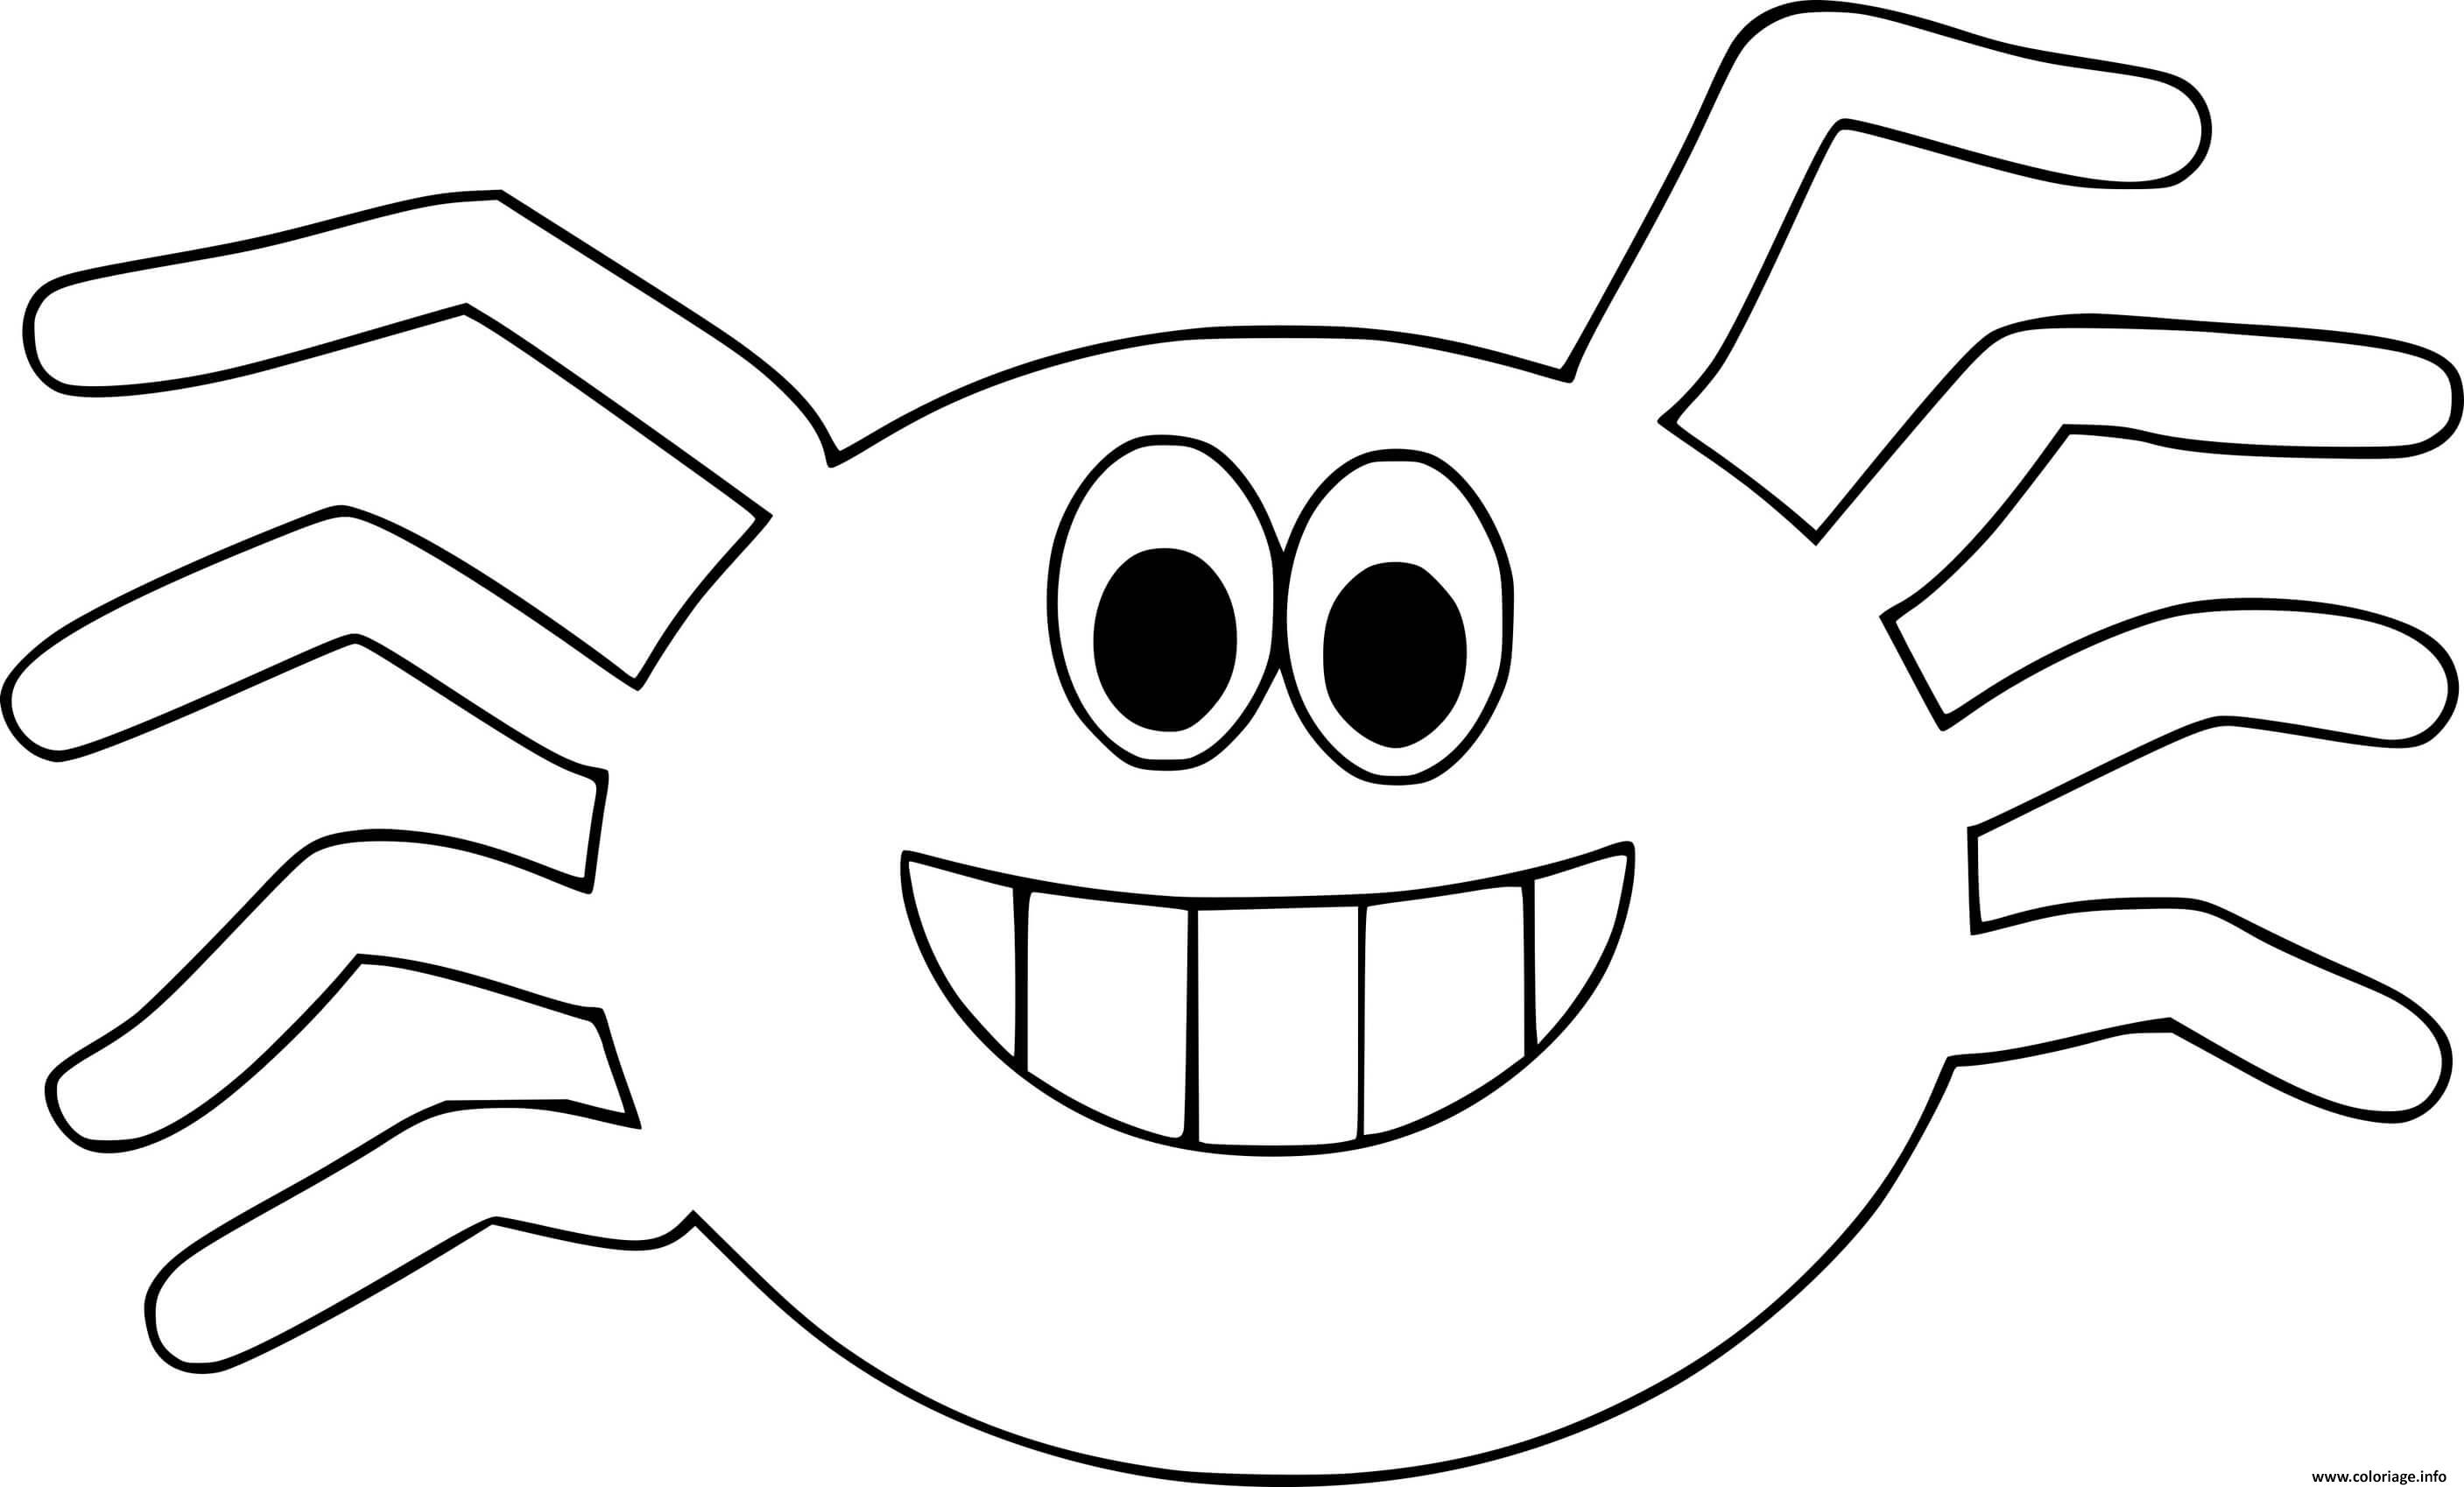 Dessin Cartoon Smiling araignee insecte Coloriage Gratuit à Imprimer